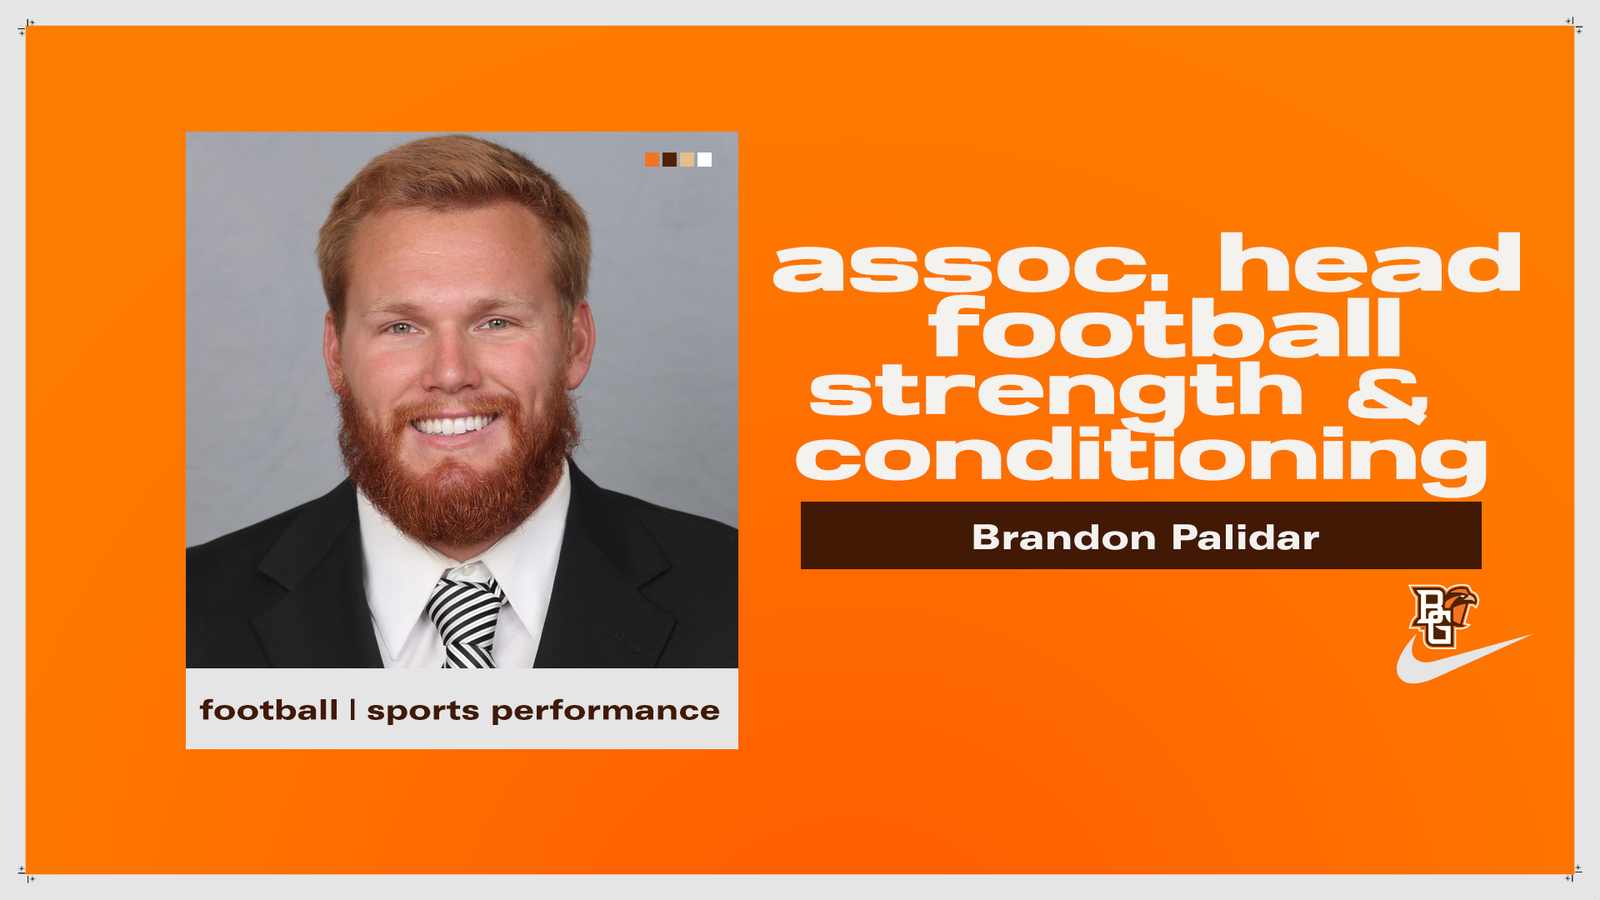 Brandon Palidar Named Associate Head Football Strength & Conditioning Coach